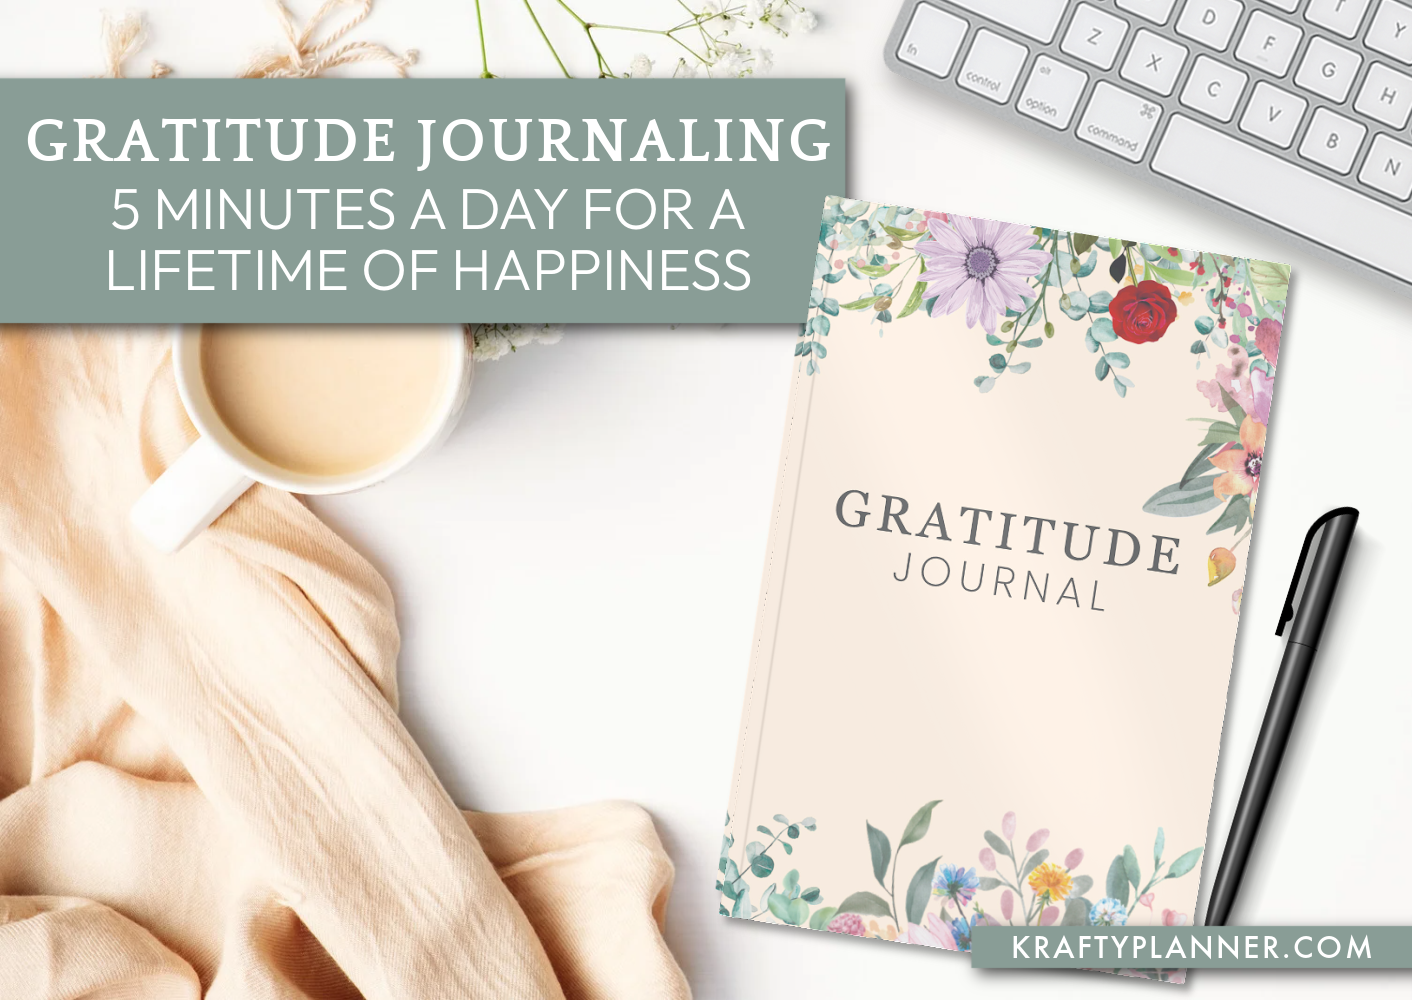 Gratitude Journal: Journal 5 minutes a day to develop gratitude